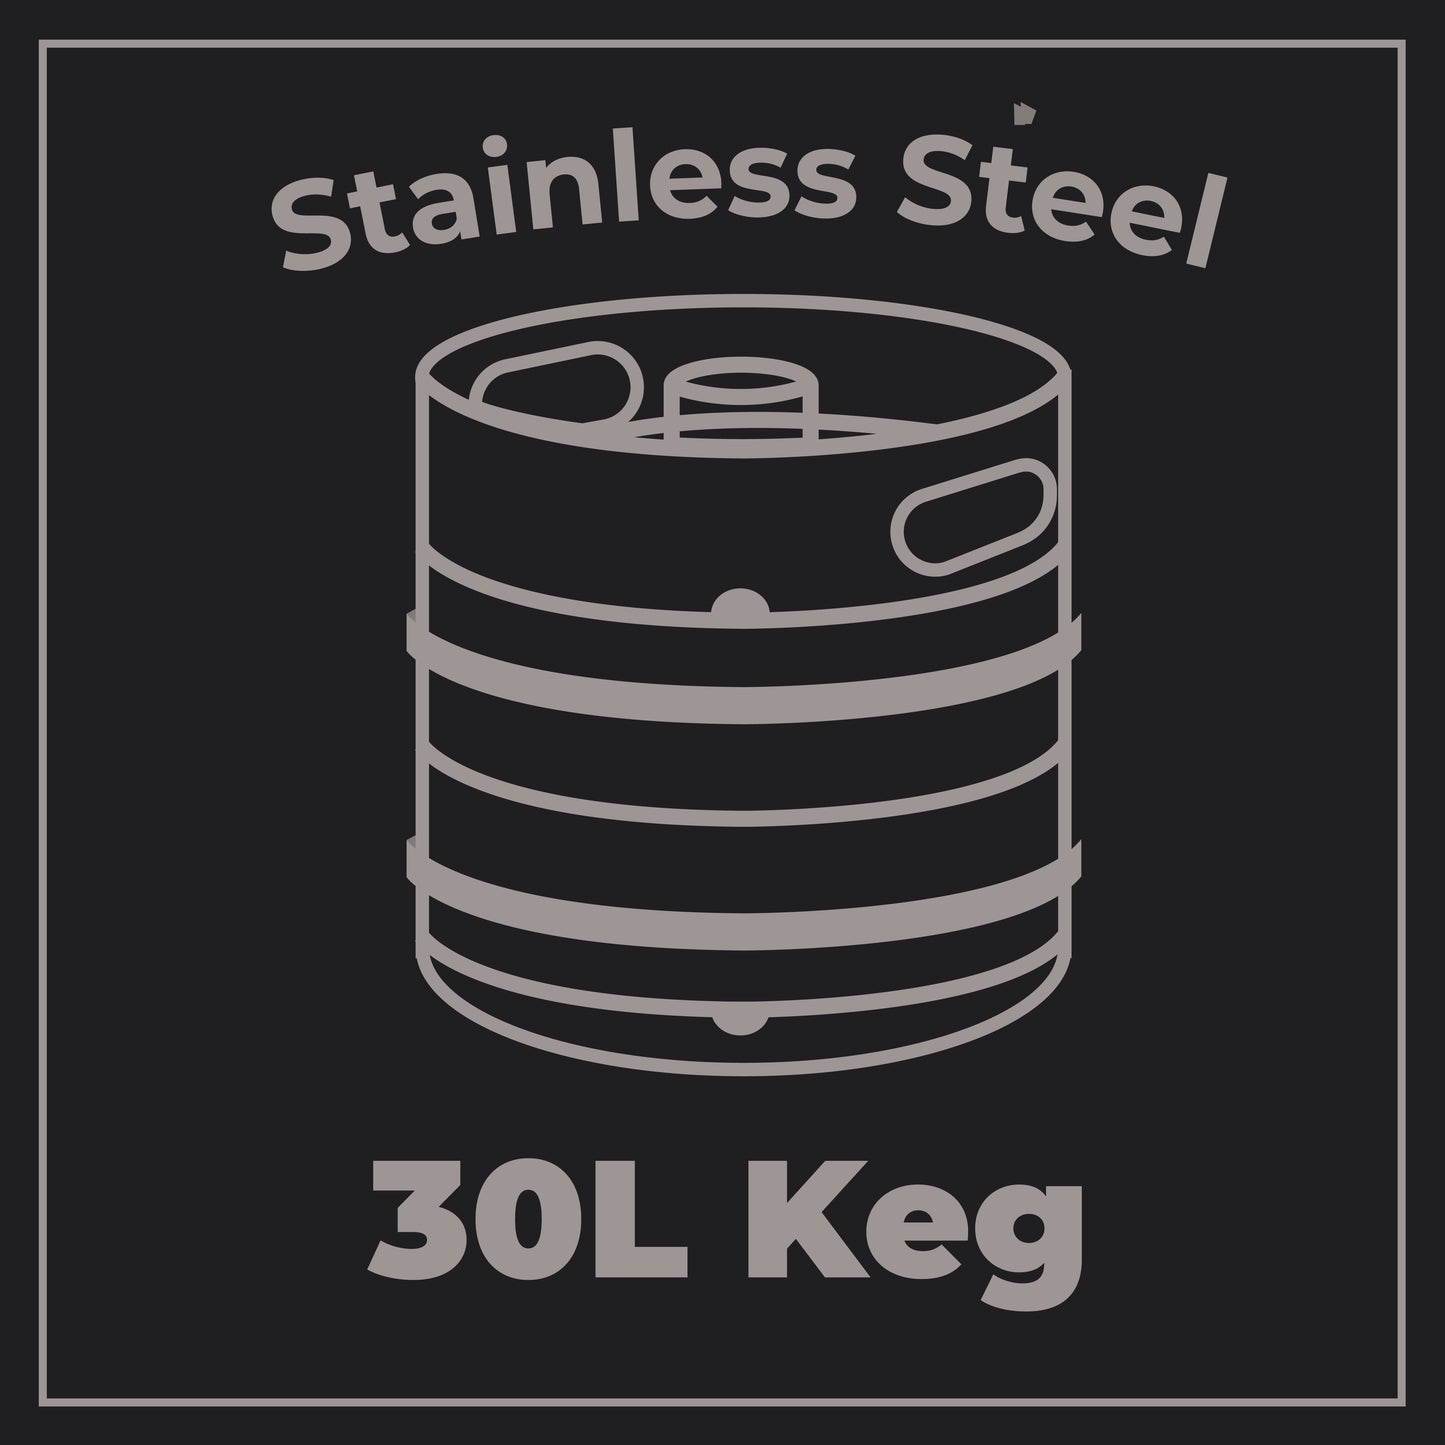 Budejovicky Budvar - Lager - 5.0% ABV - 30L Keg(53 Pints) - Stainless Steel Keg